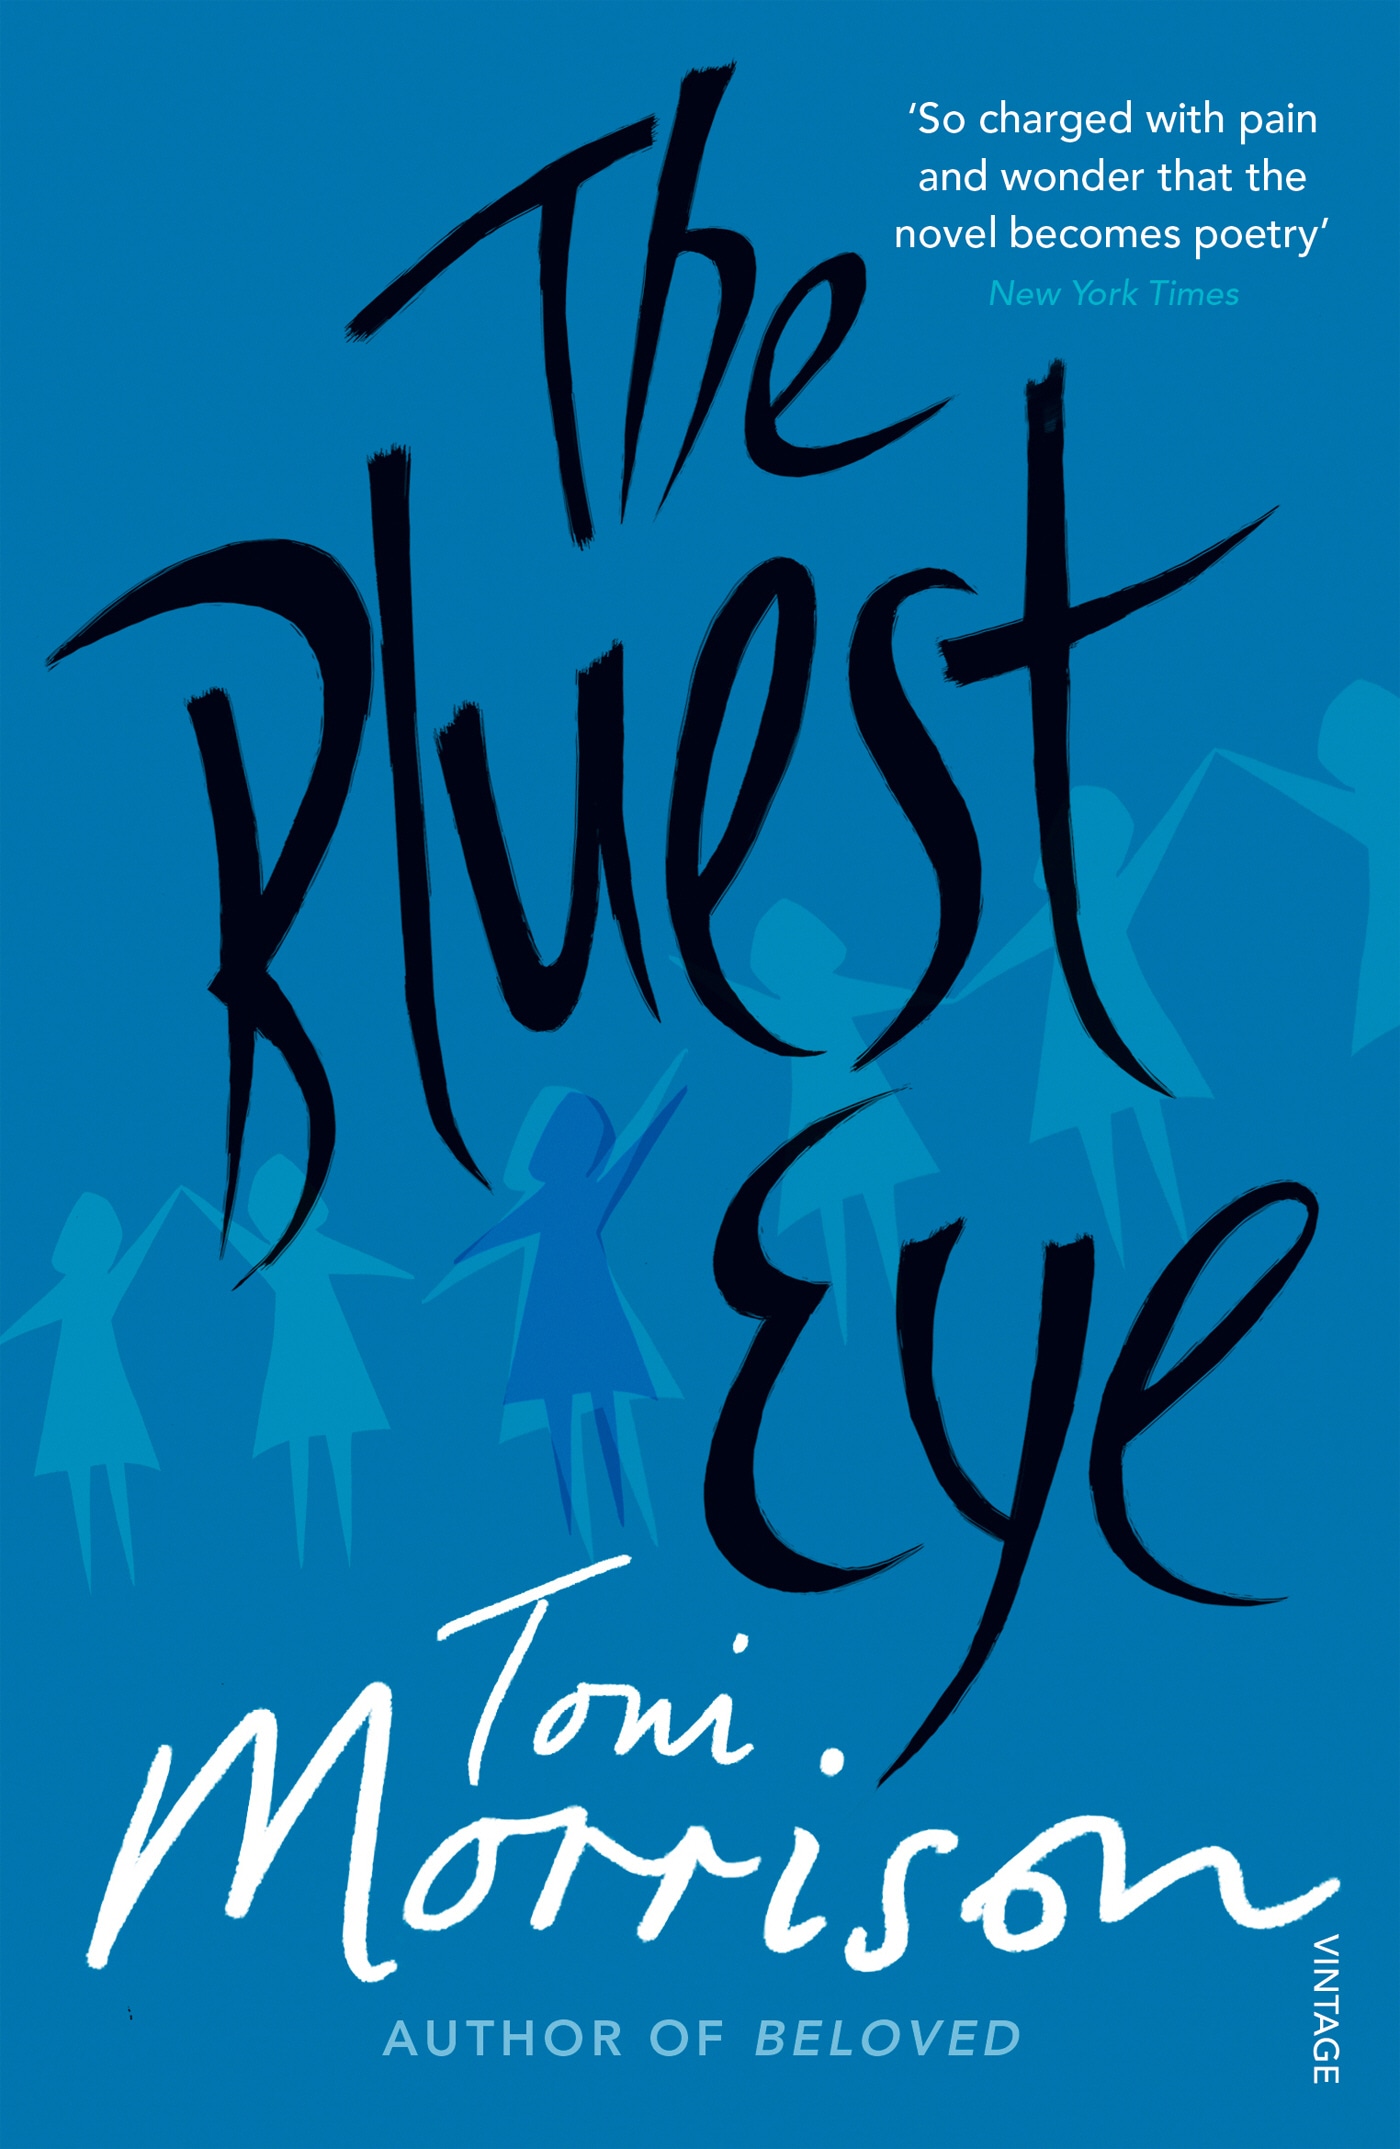 Book “The Bluest Eye” by Toni Morrison — March 4, 1999